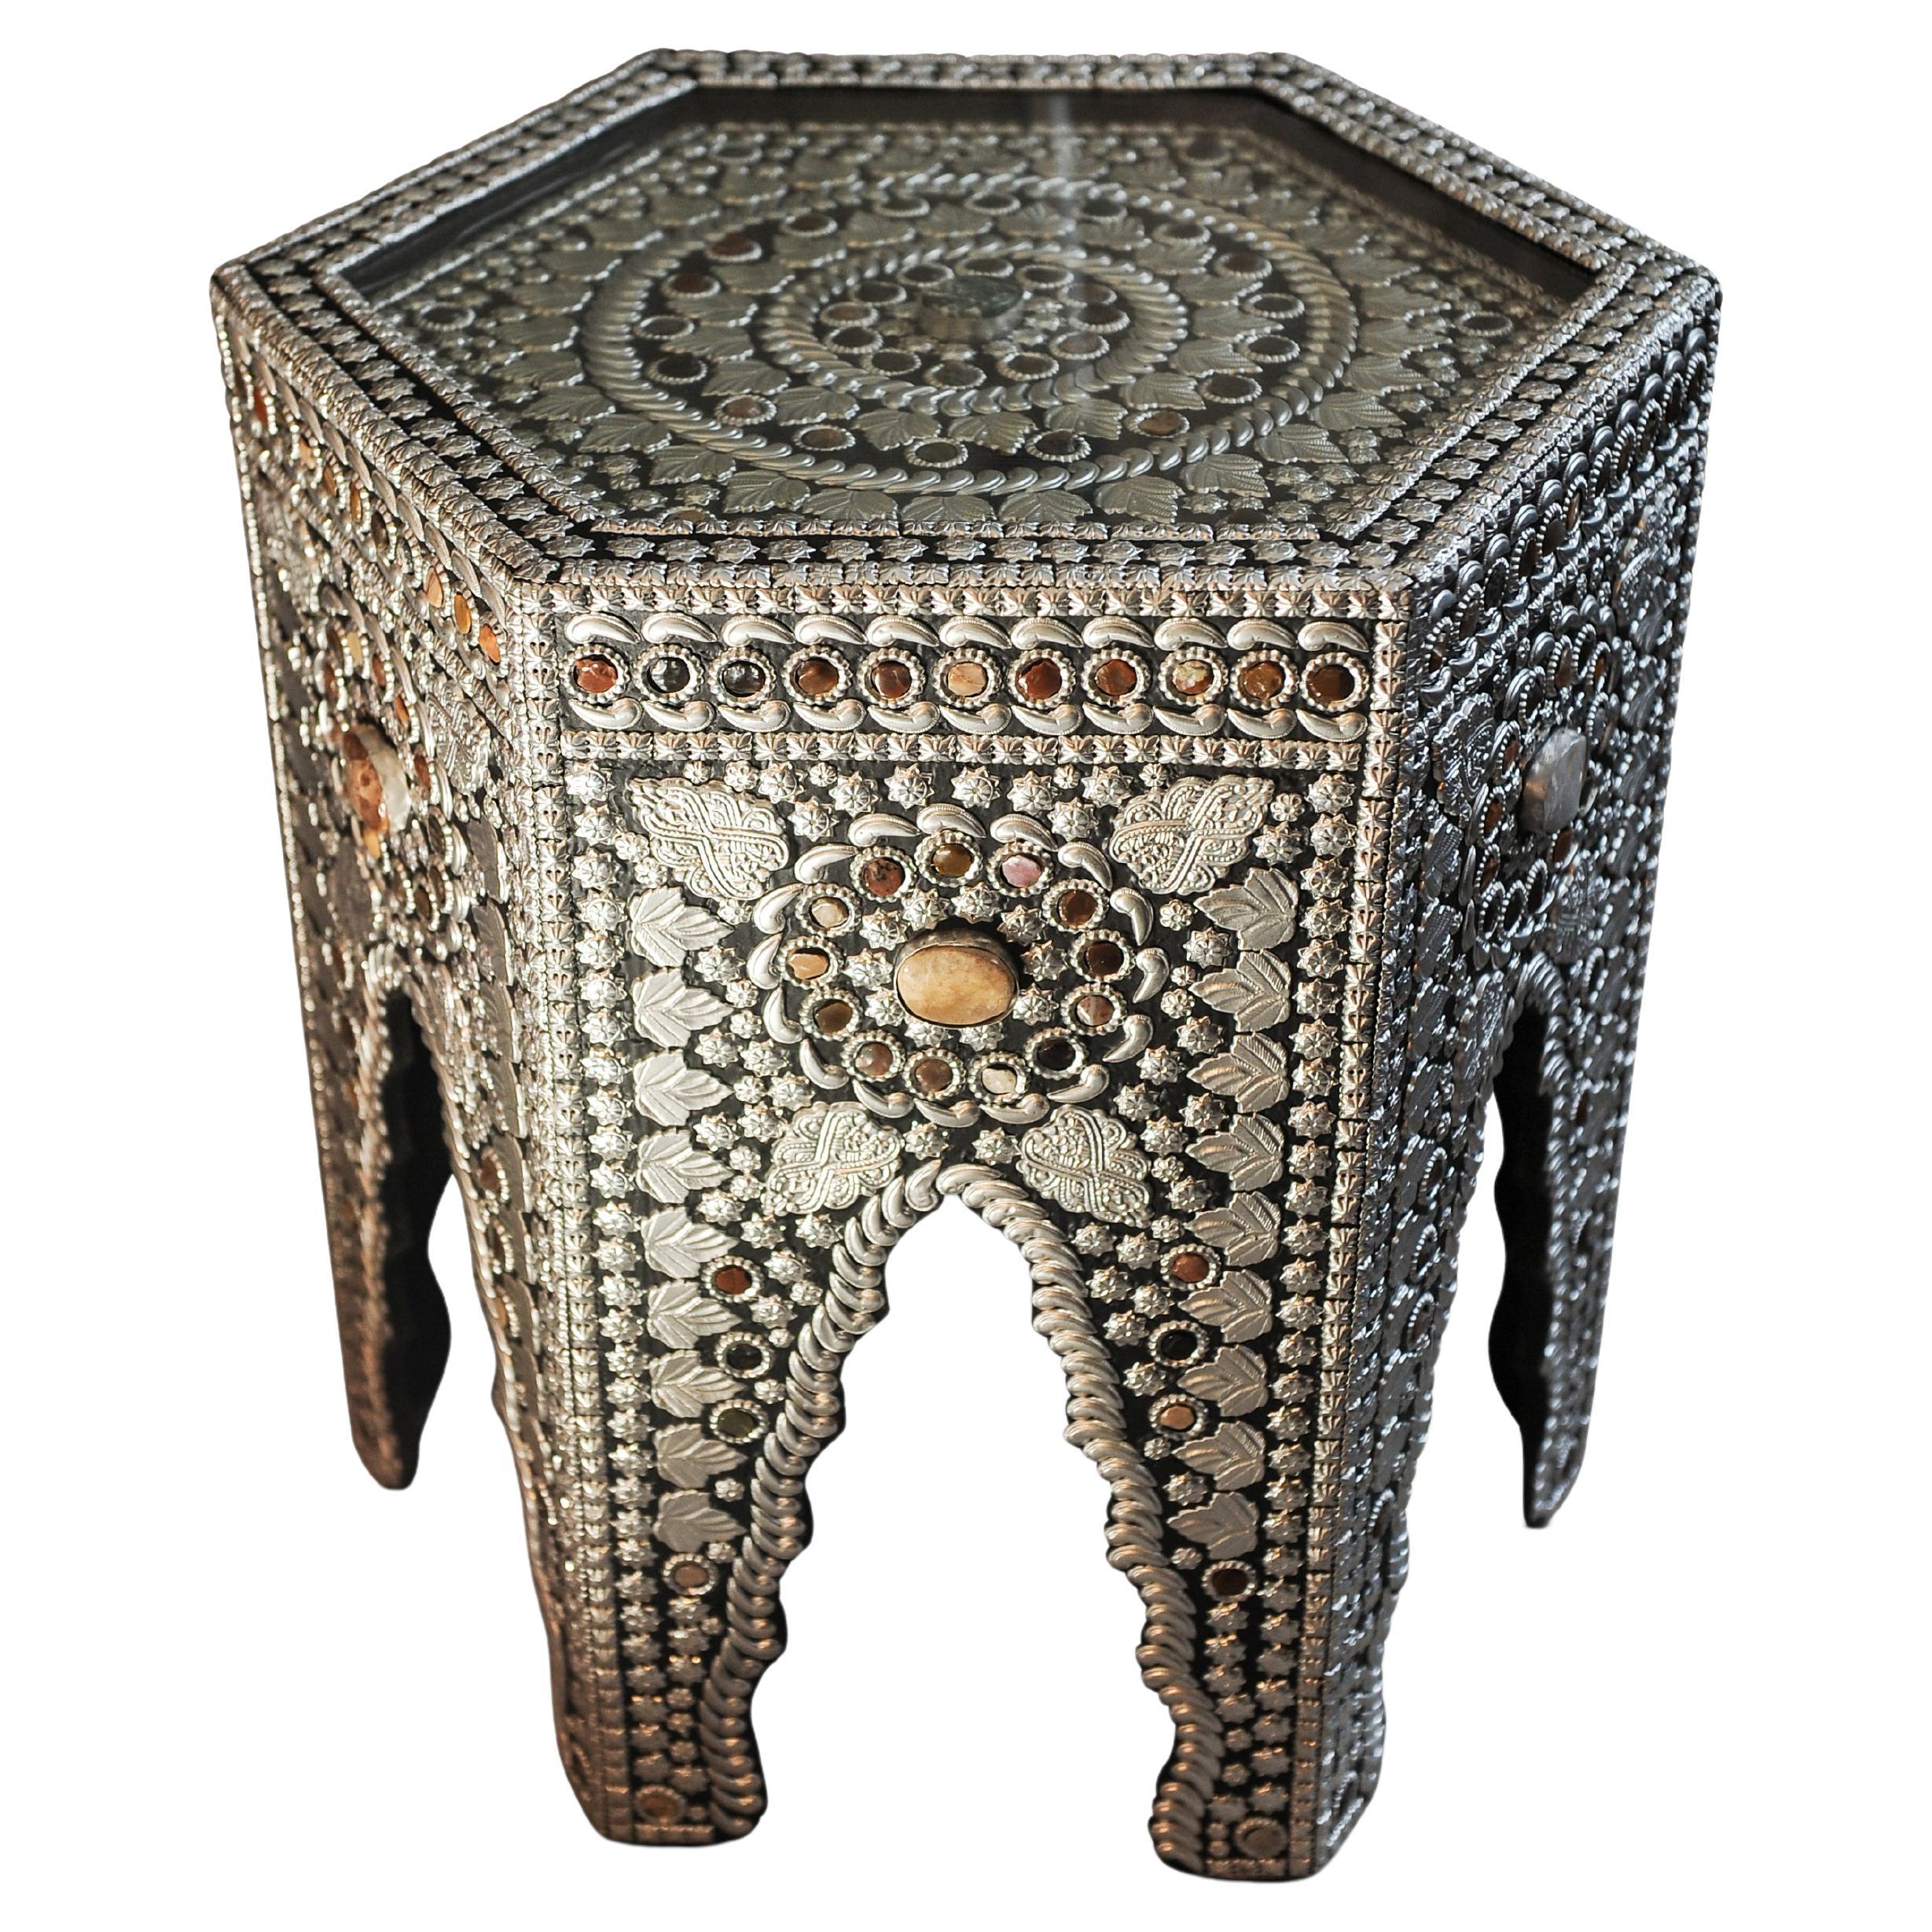 A Moorish Design Hexagonal Glazed Tea Table with Semi Precious Stones.